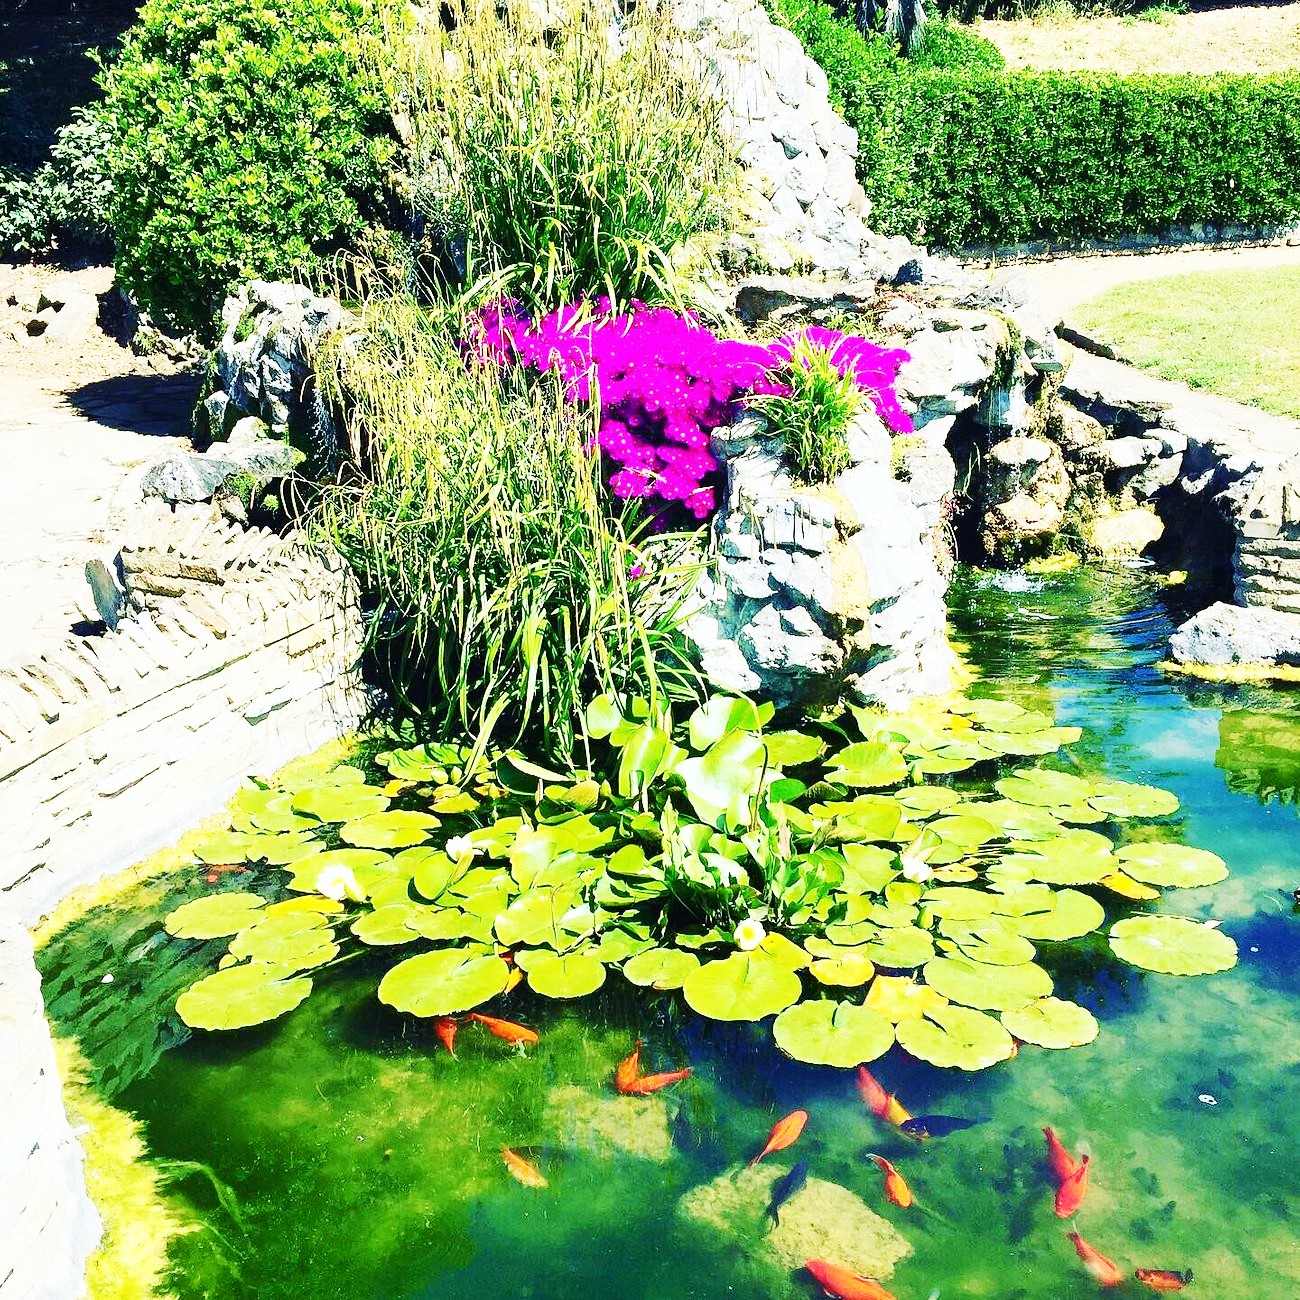 <img src="colourful.jpg" alt="colourful fish pond at felixstowe"/> 